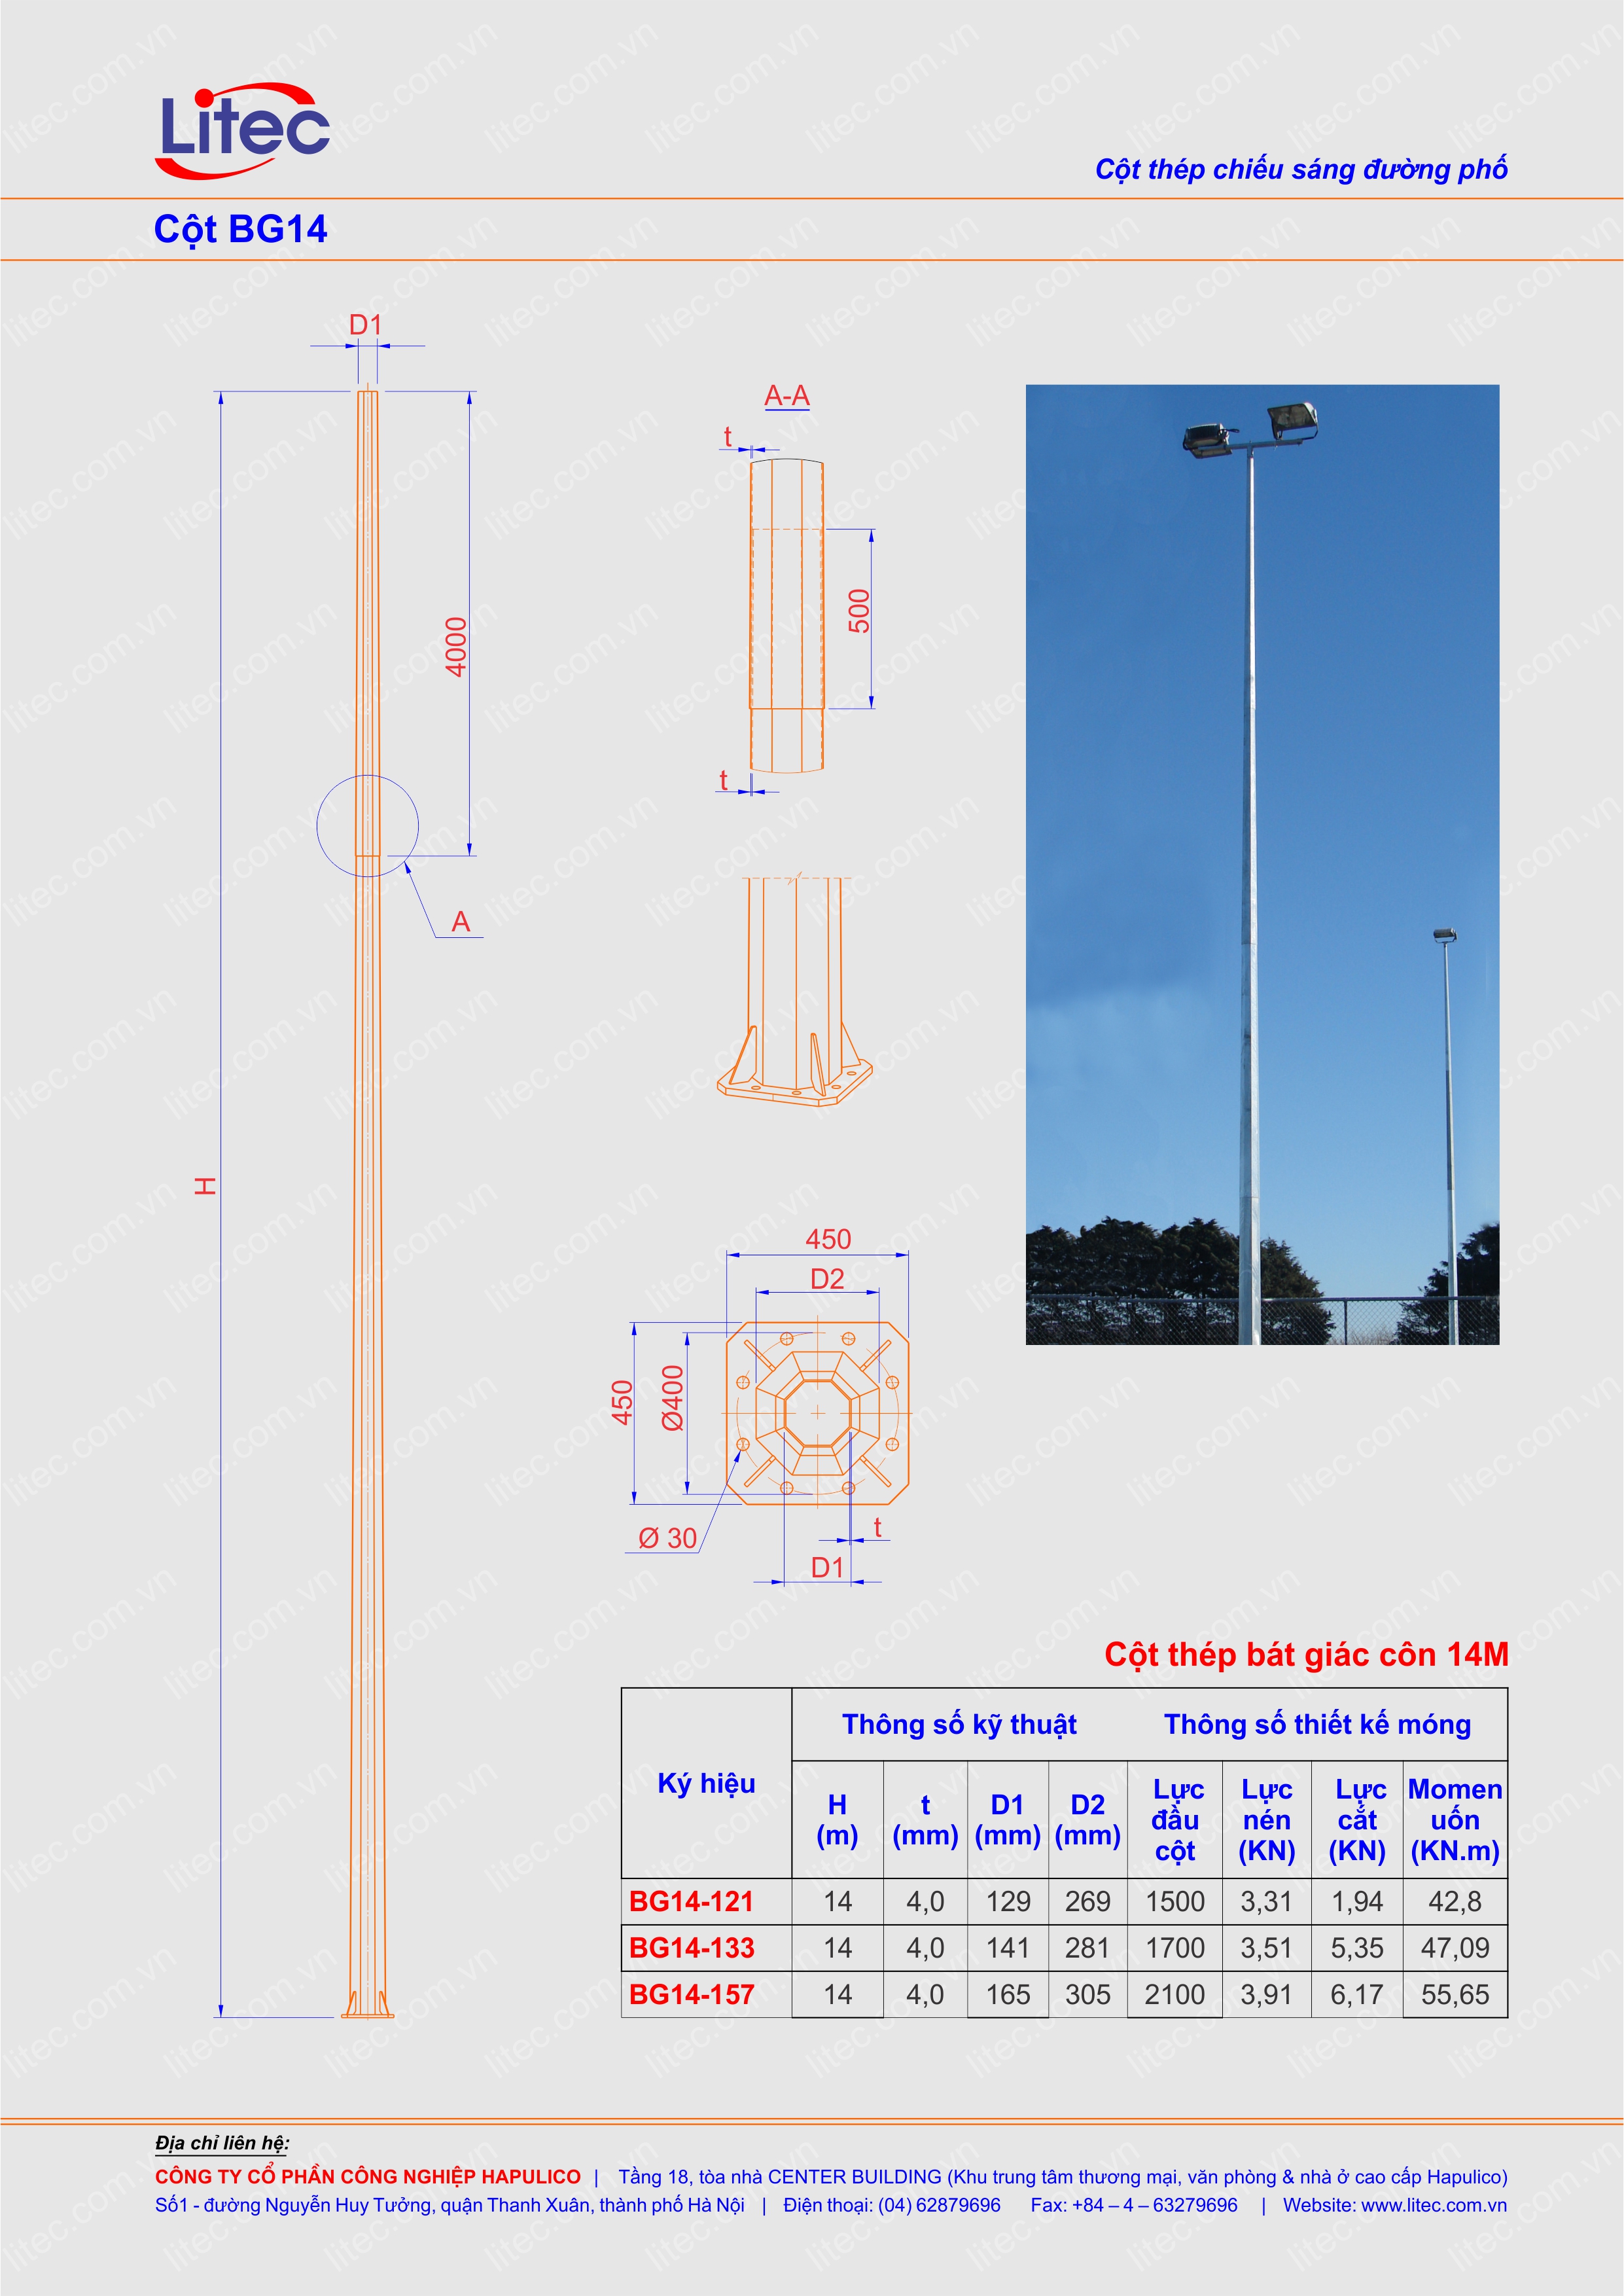 Area Lighting Poles